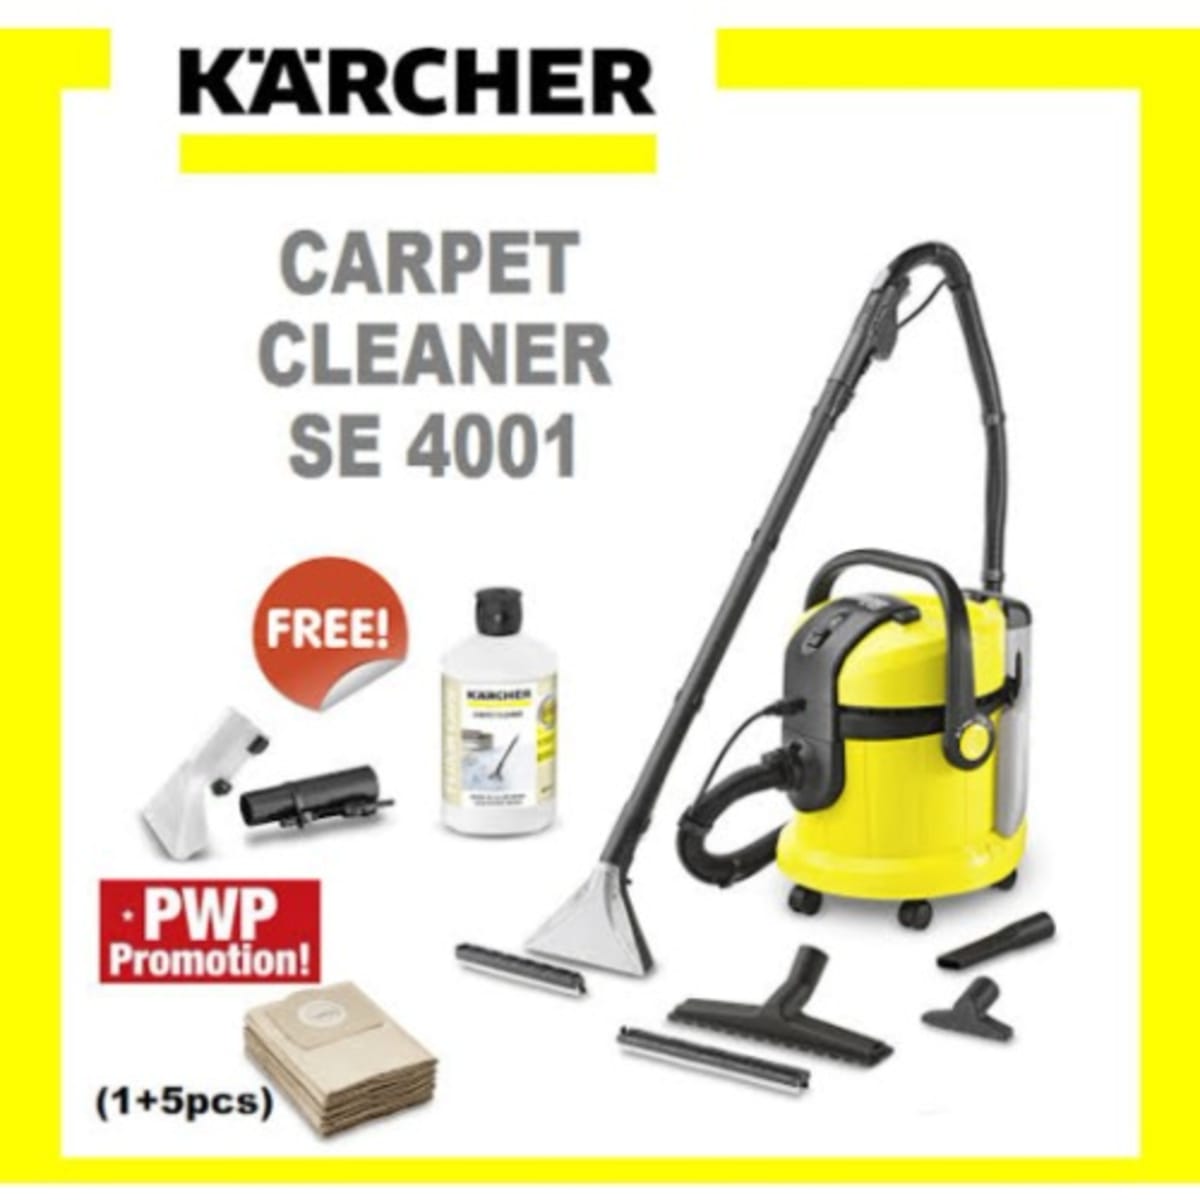 Kärcher Carpet cleaner SE 4001